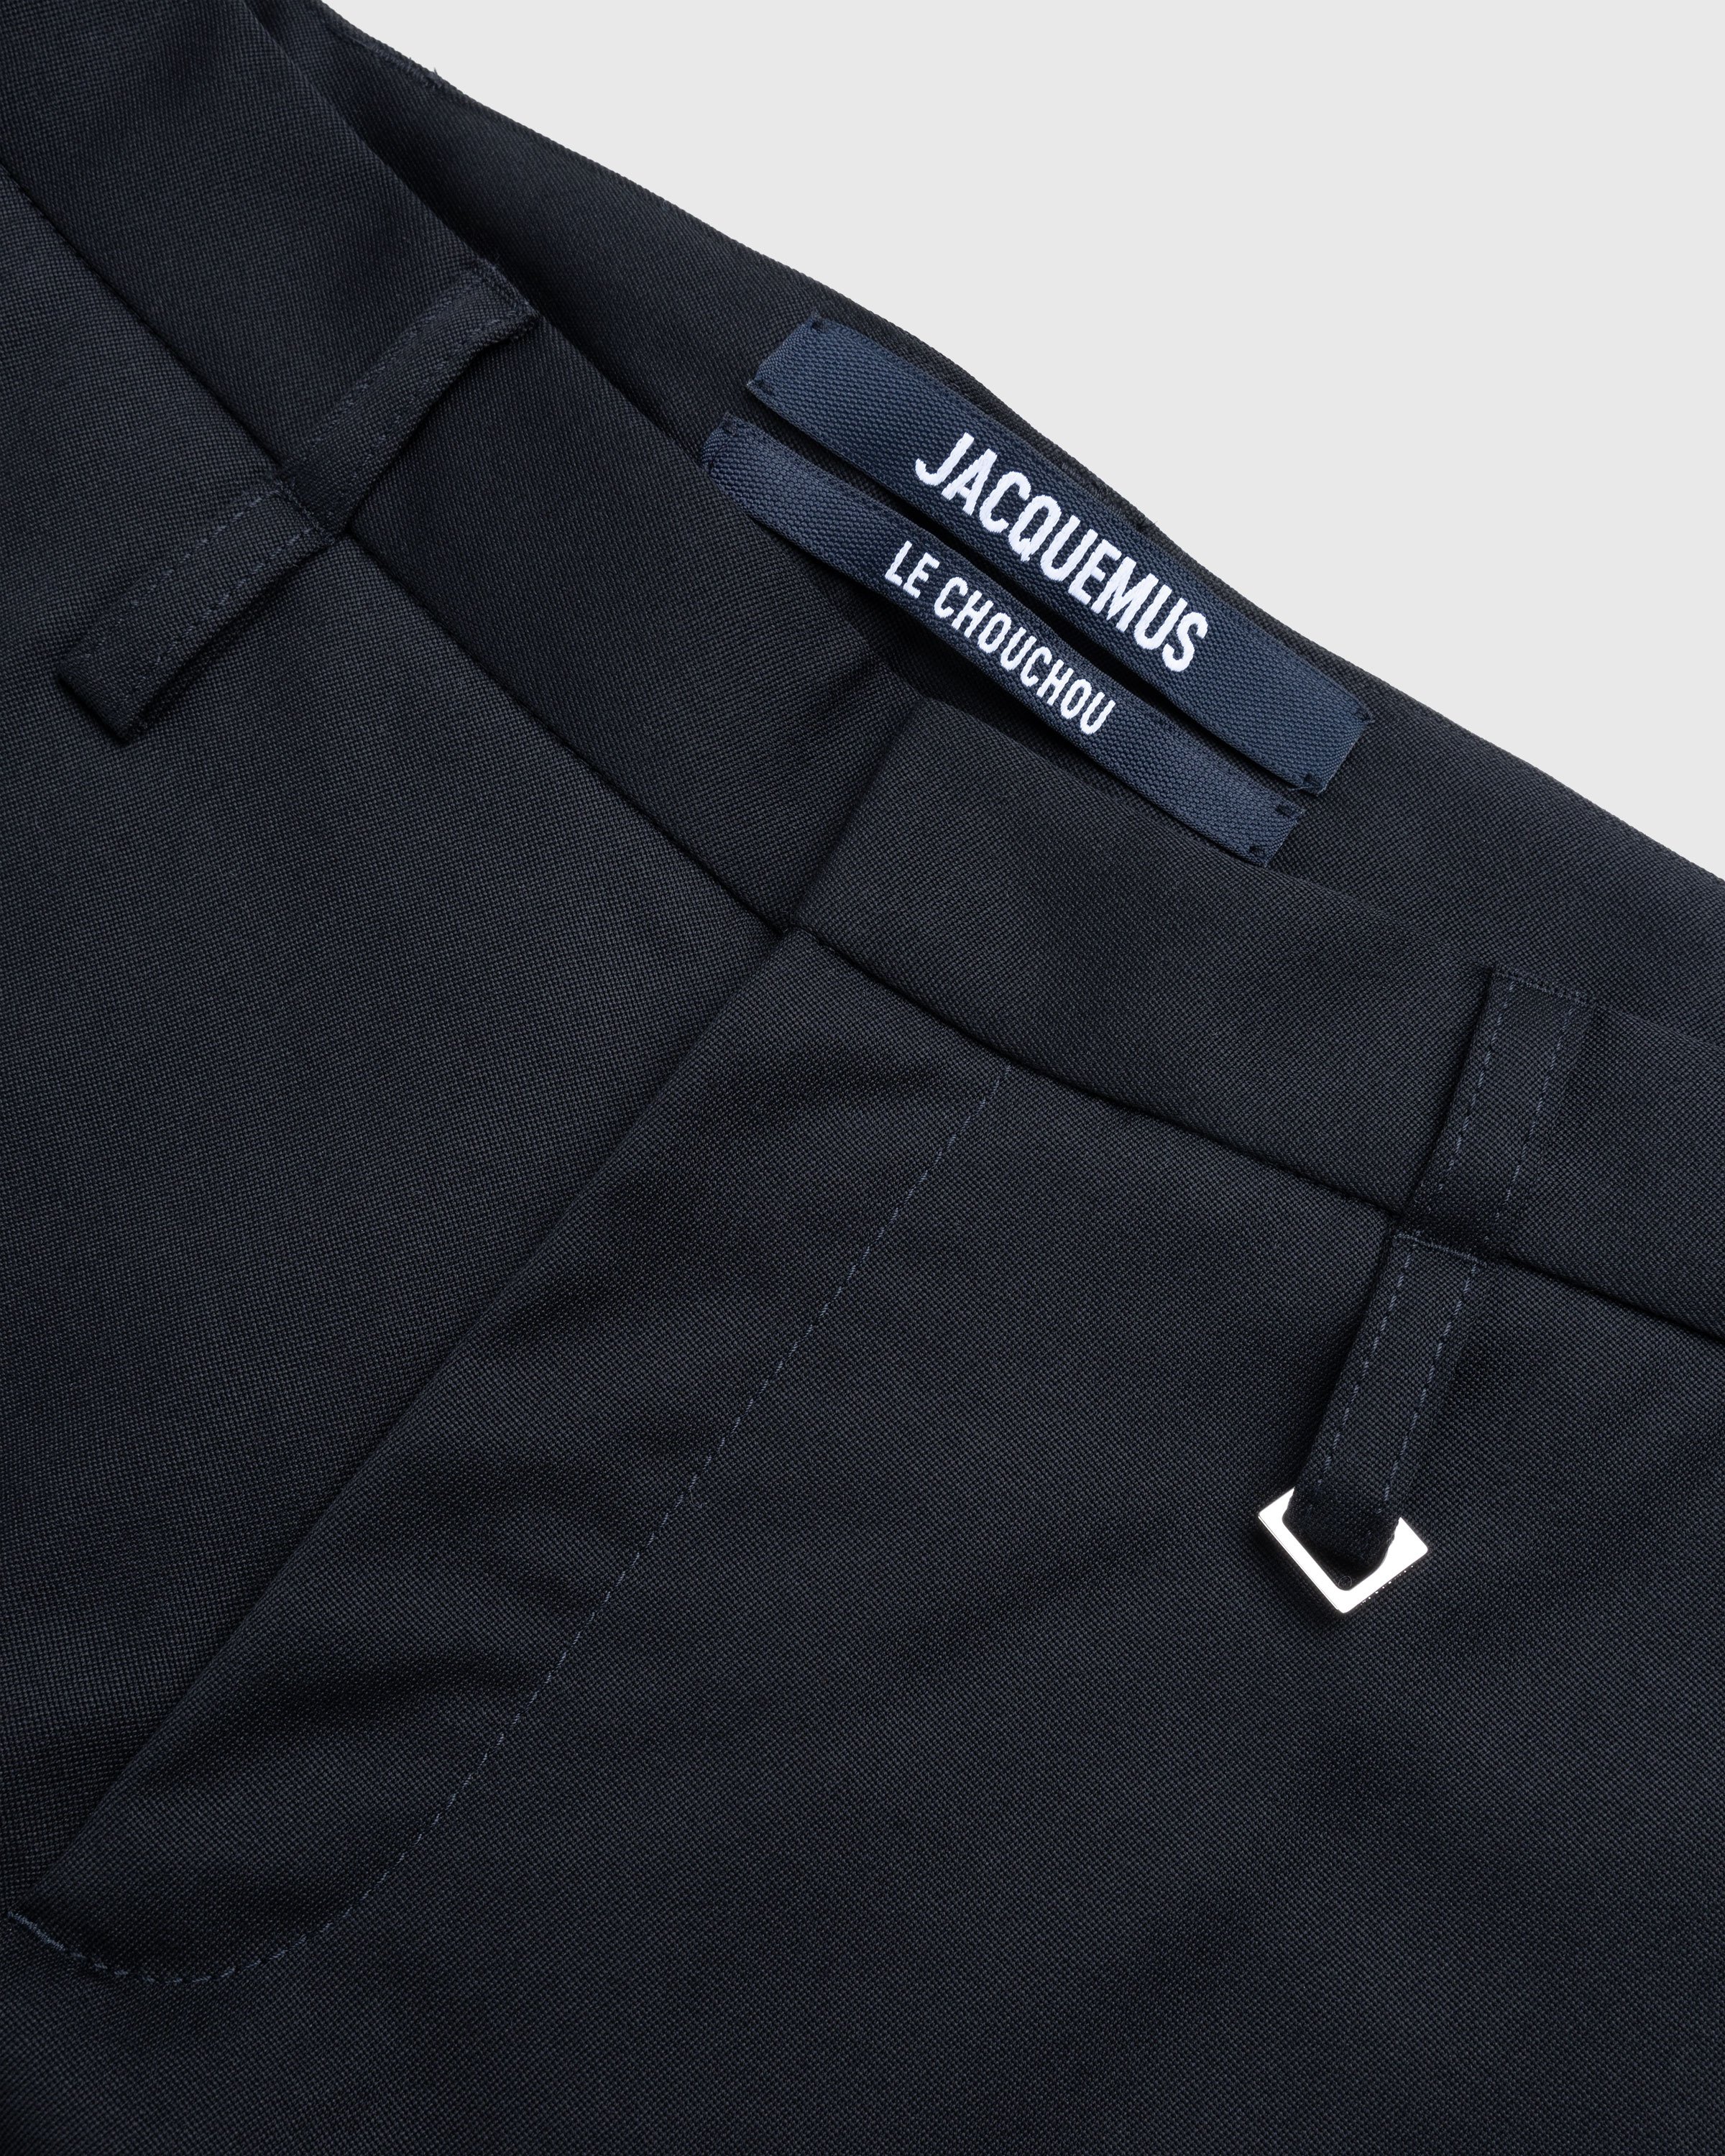 JACQUEMUS – Le Pantalon Piccinni Black | Highsnobiety Shop